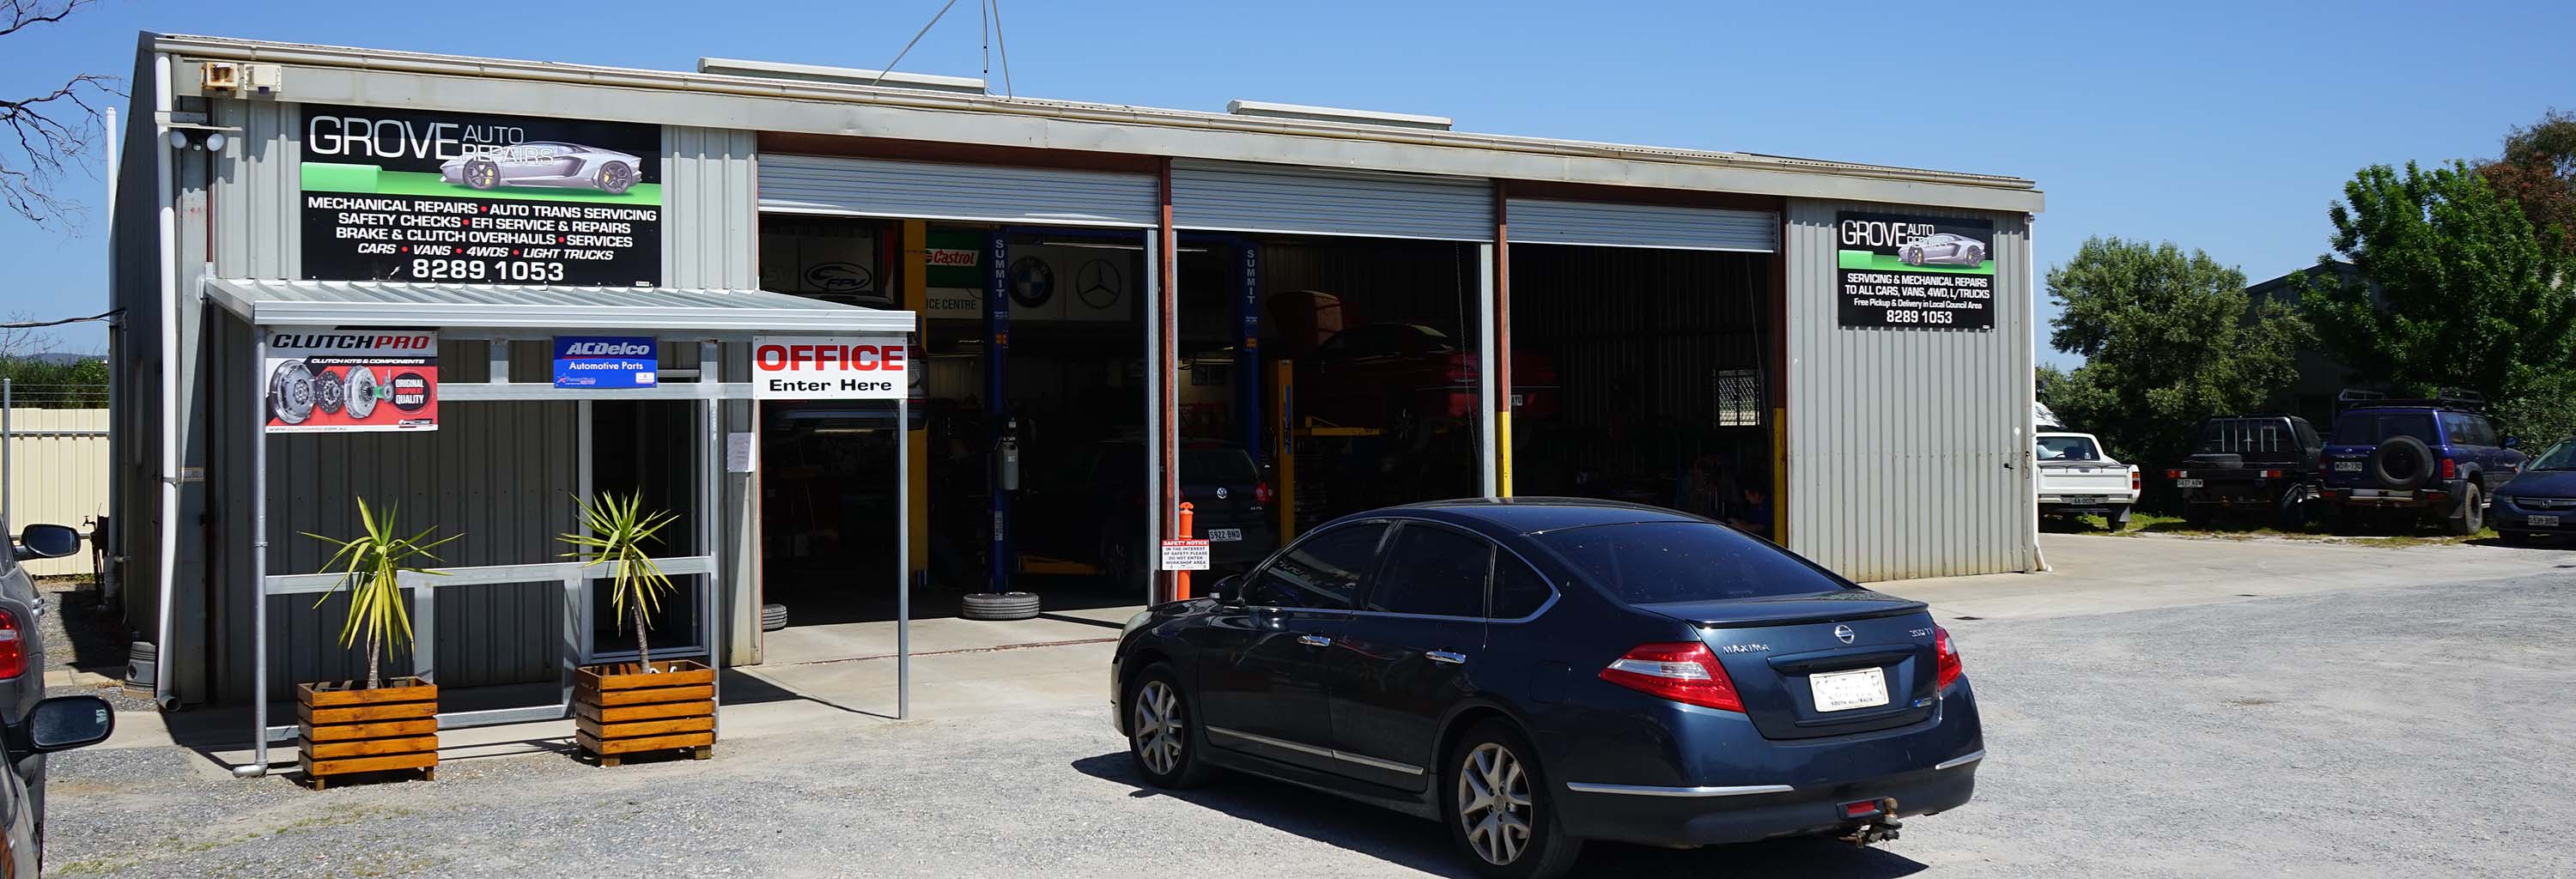 grove auto repairs in Adelaides north